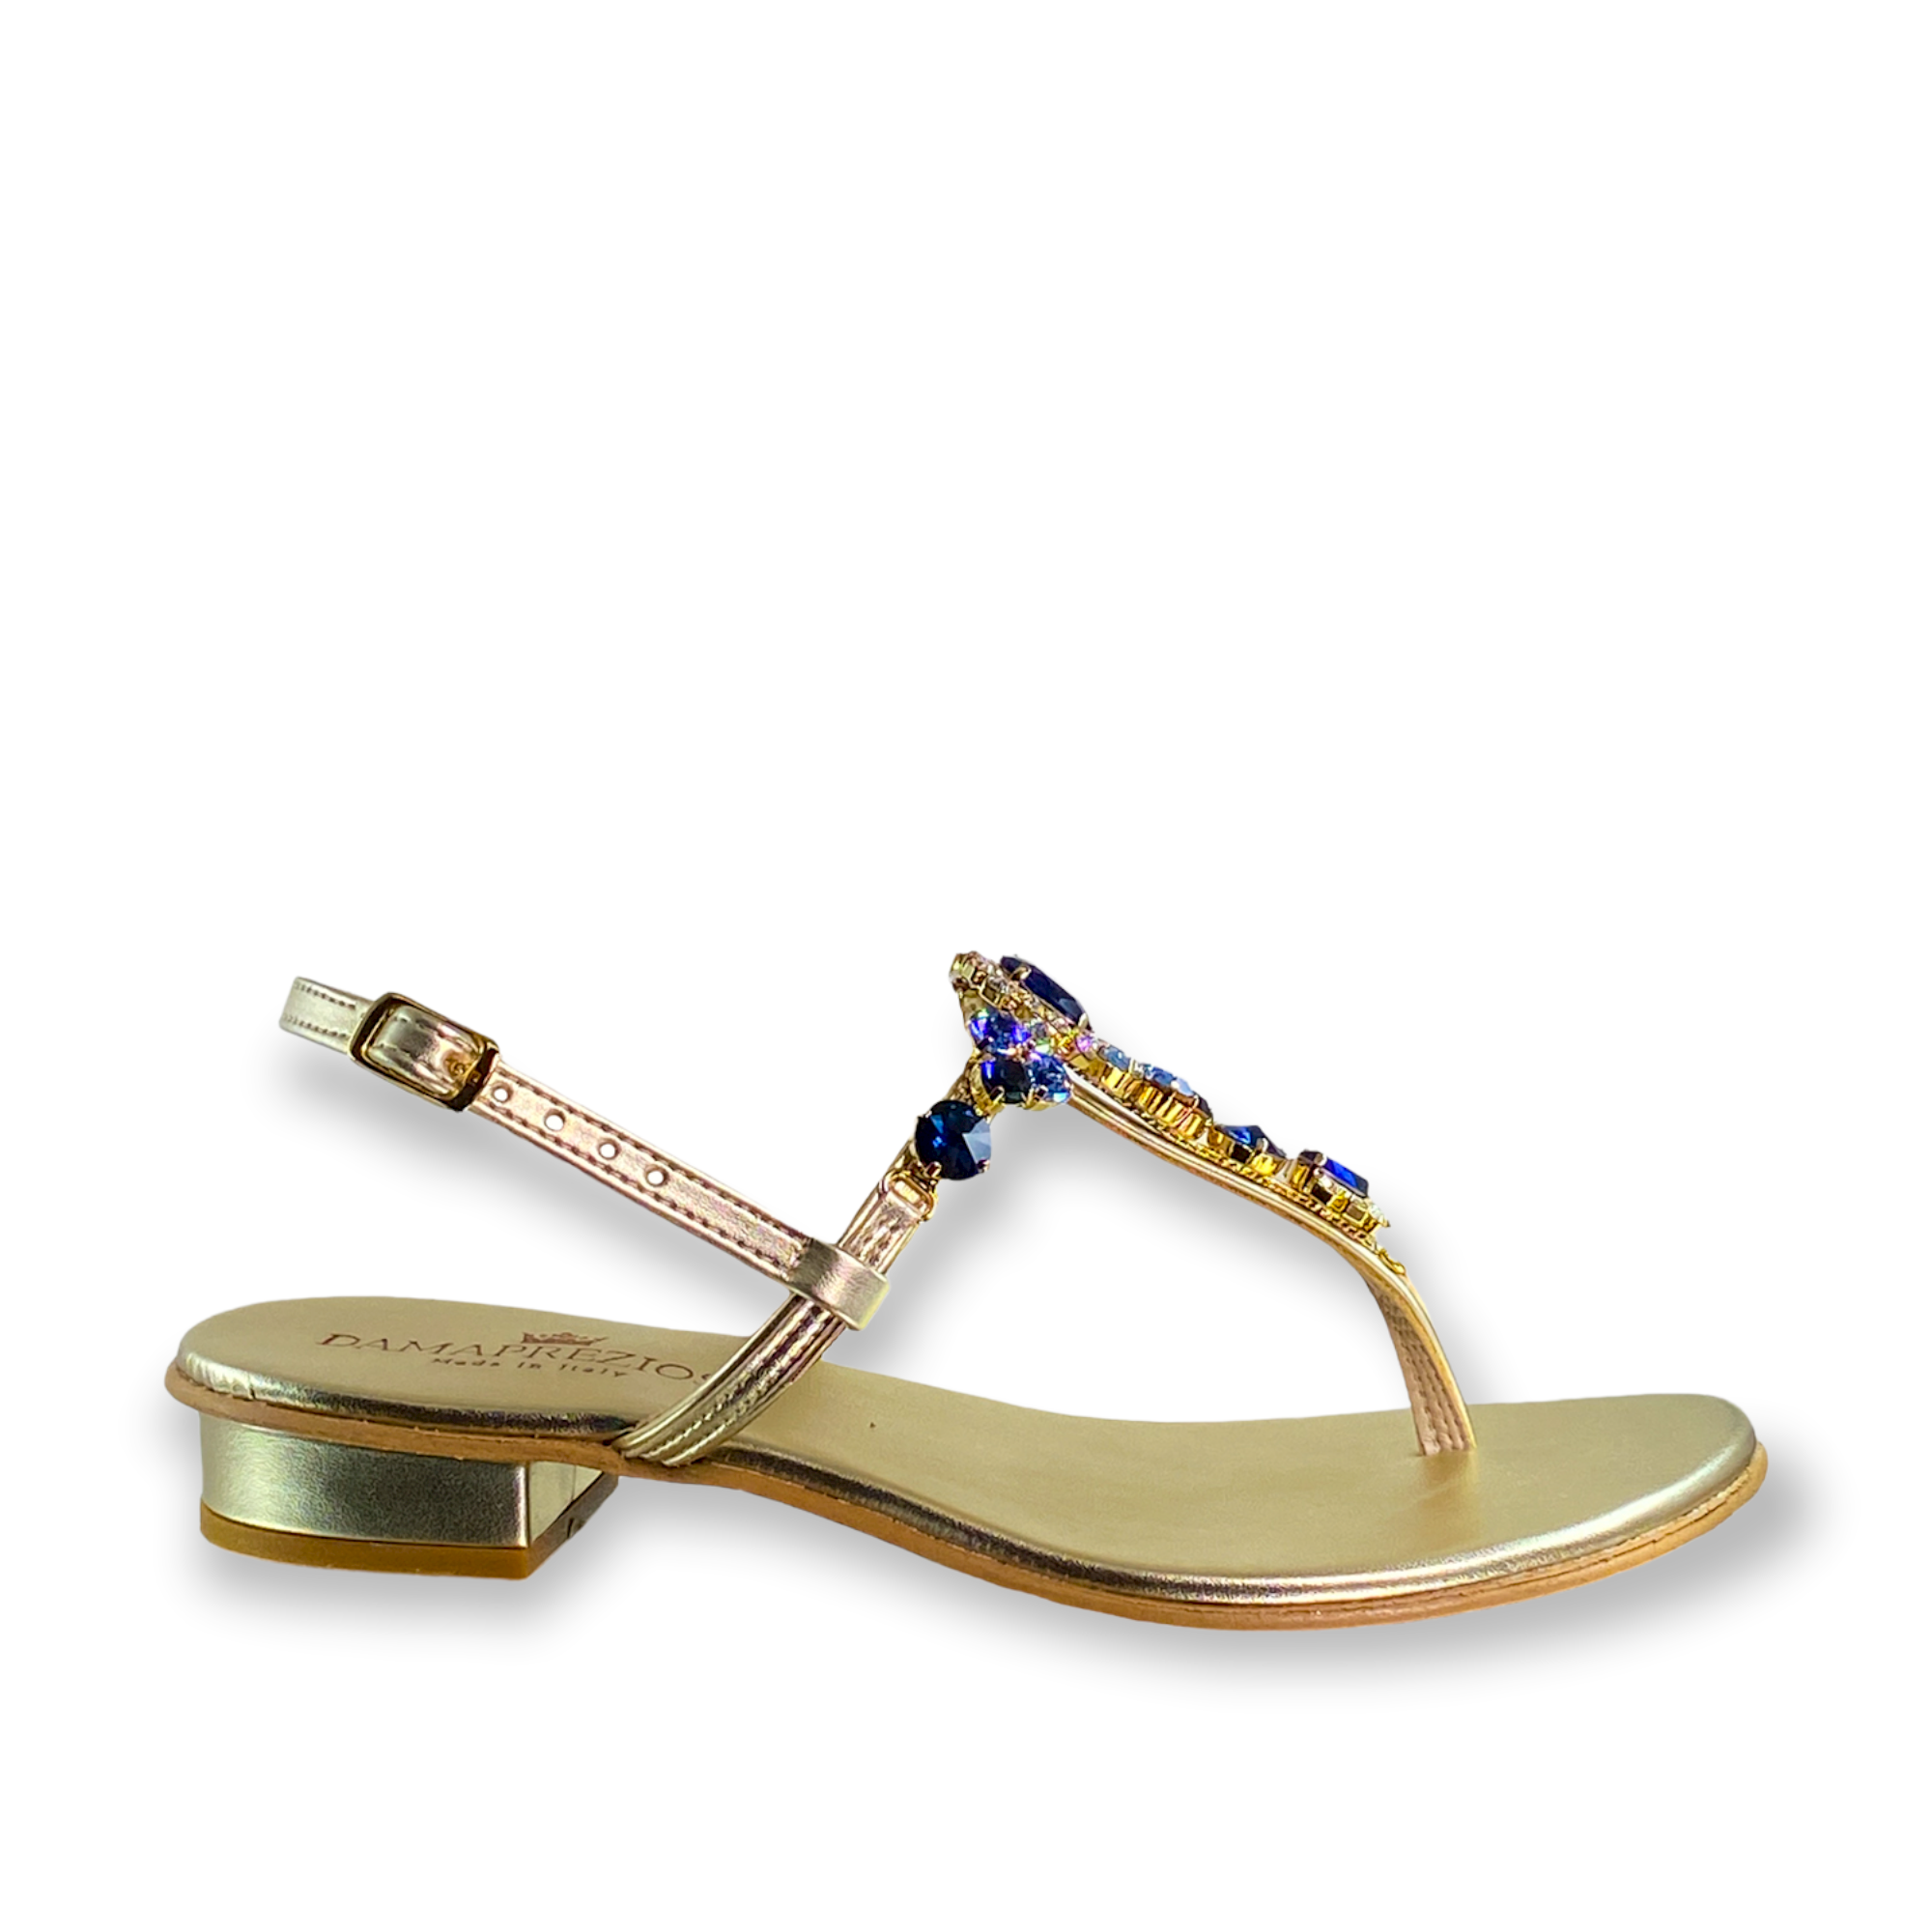 Lucrezia blue-crystal flat jewel sandal